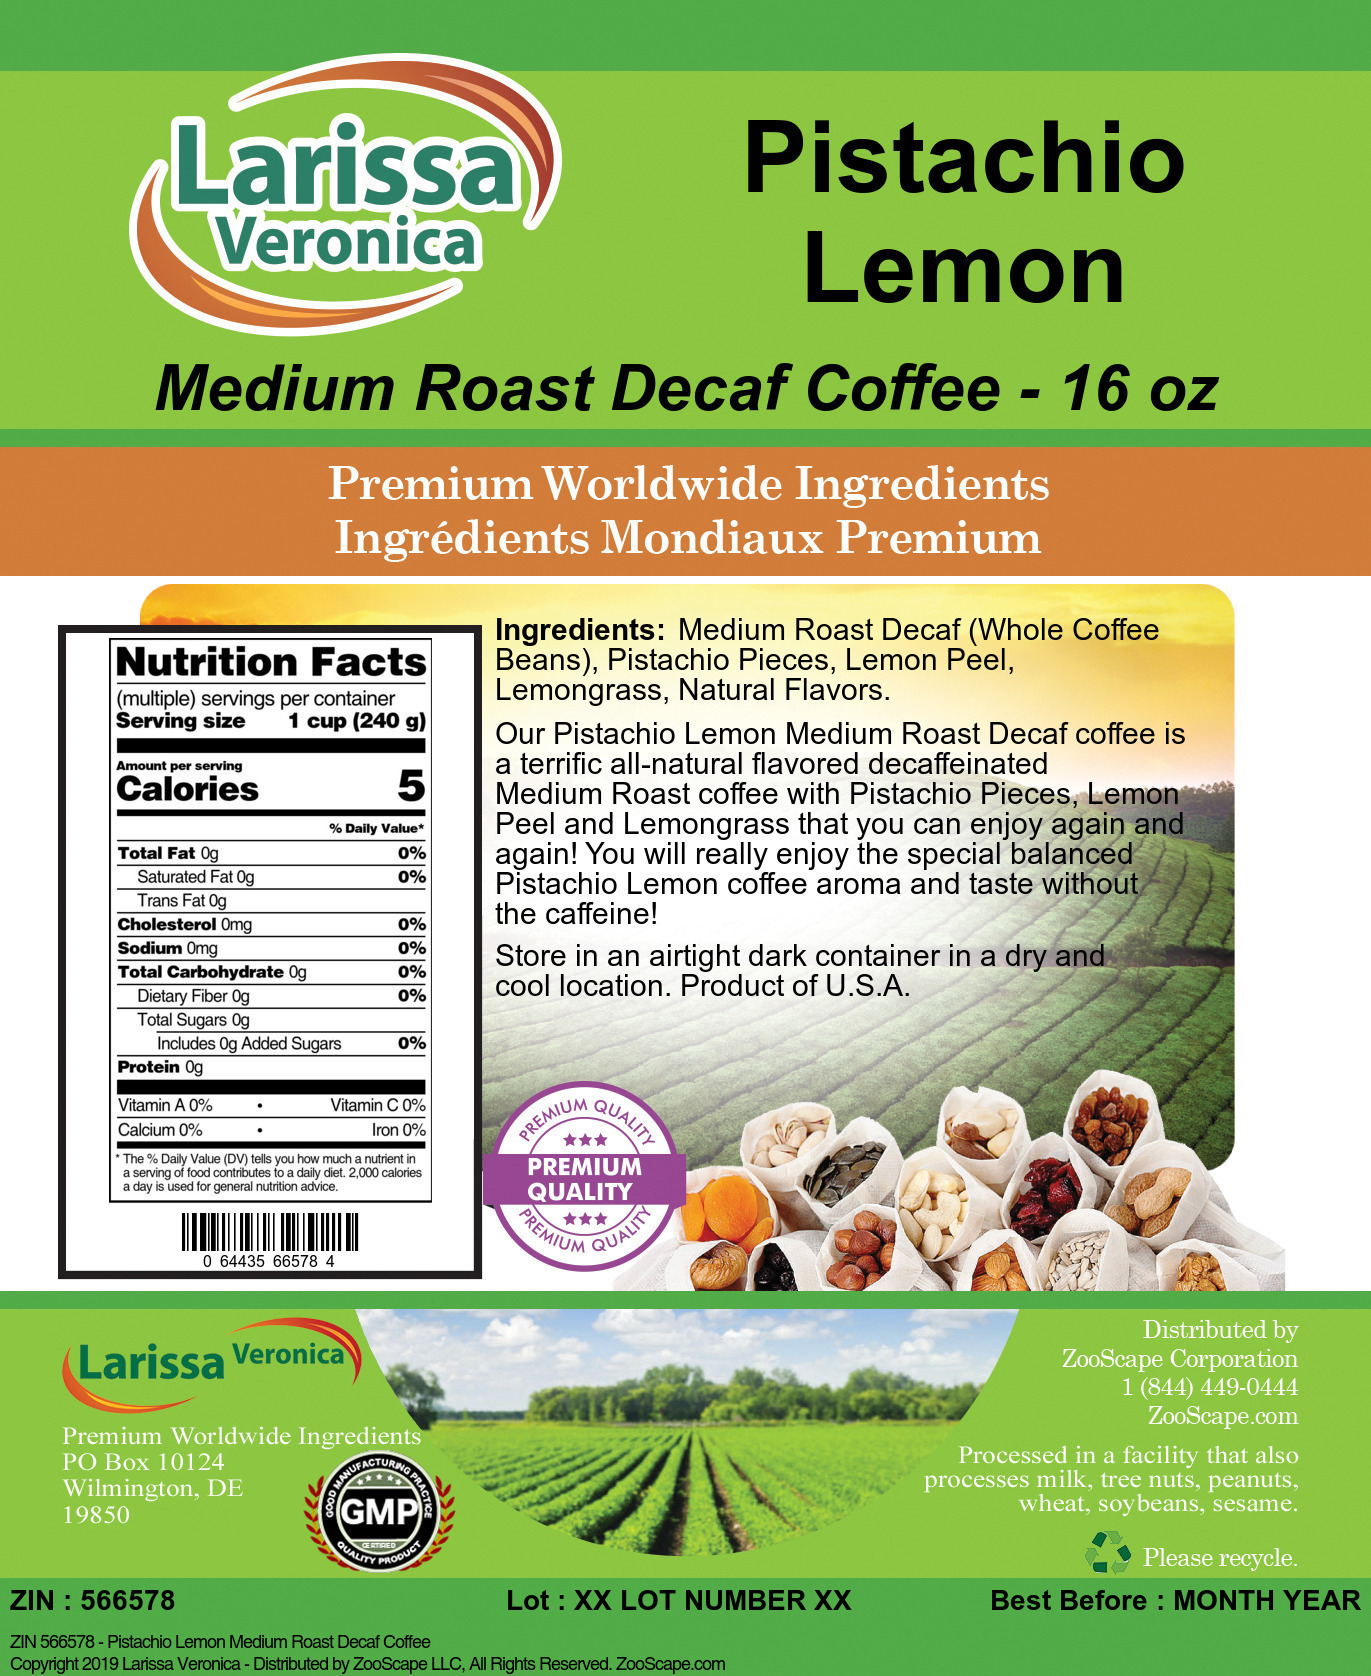 Pistachio Lemon Medium Roast Decaf Coffee - Label